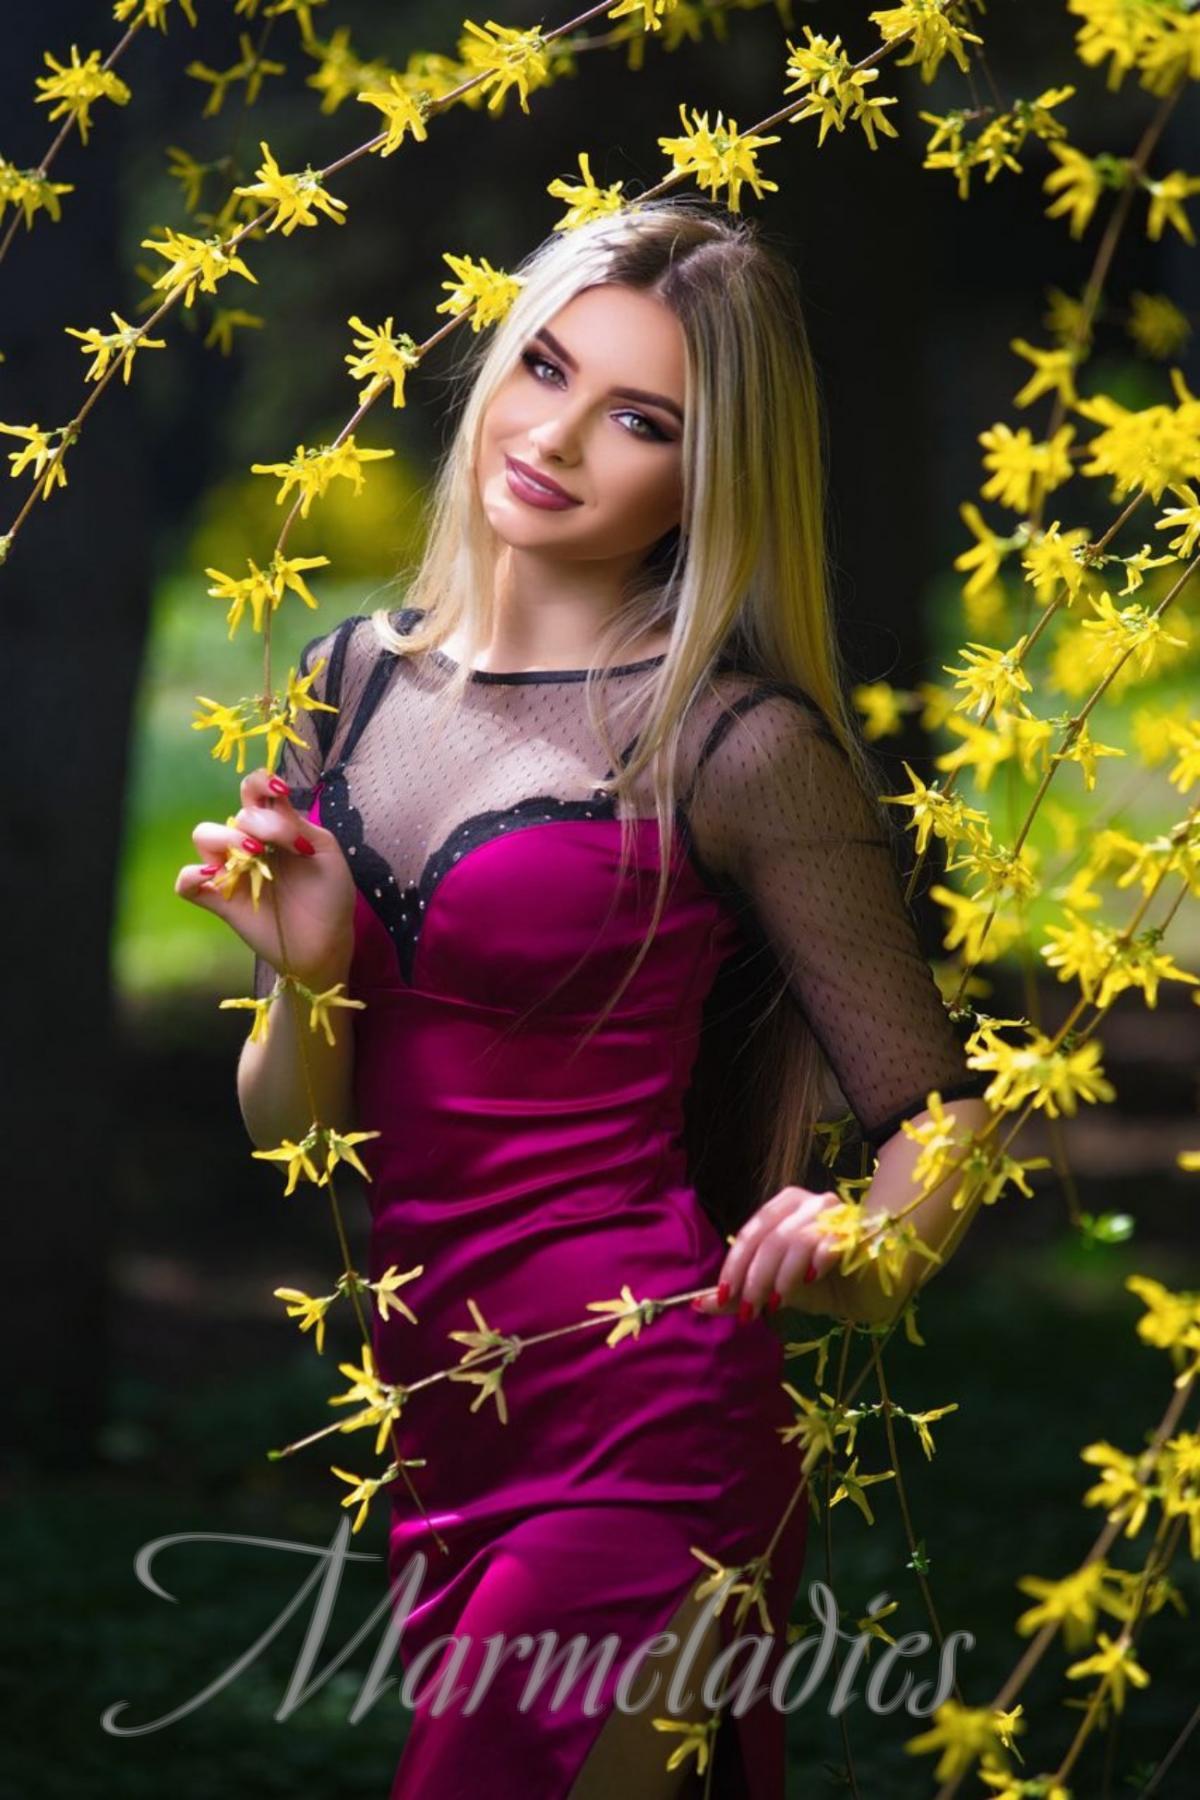 Sexy woman Valeriya, 23 yrs.old from Konstantinovka, Ukraine